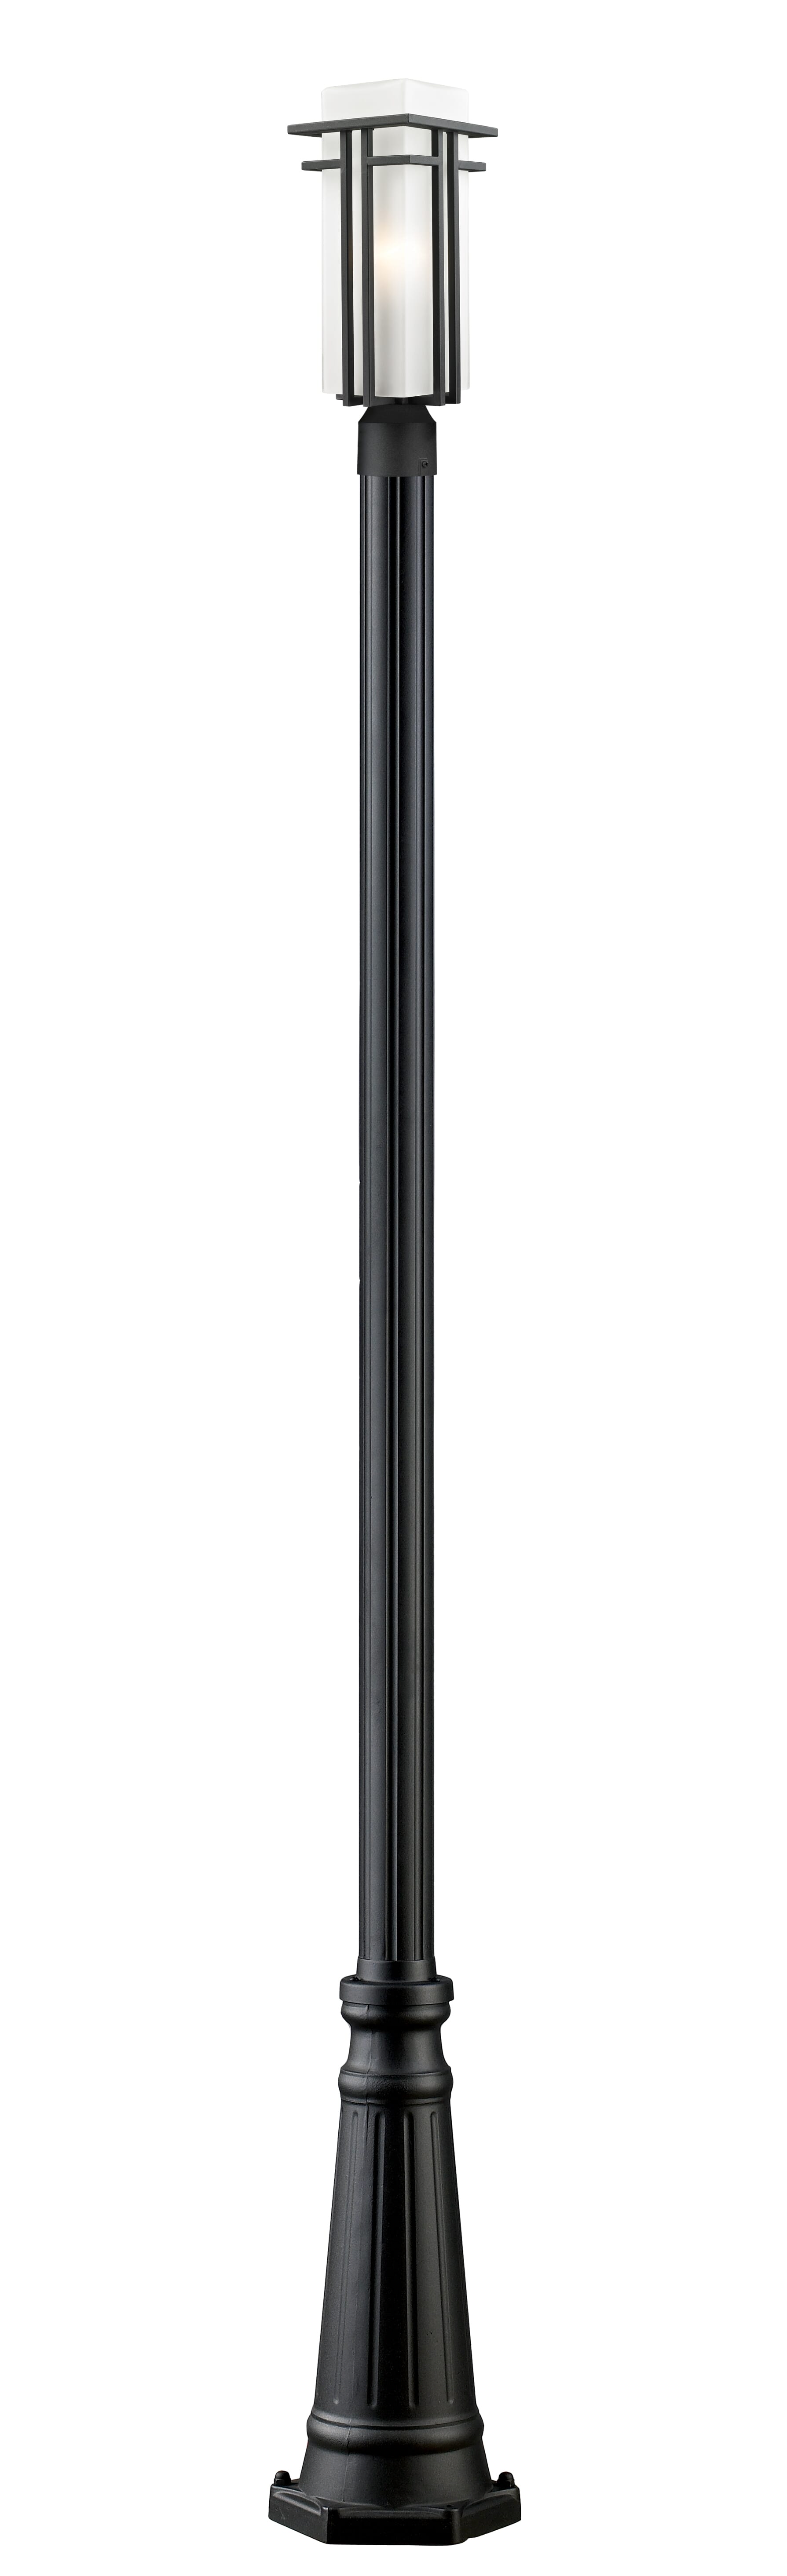 Abbey 1-Light Outdoor Post Mounted Fixture Light In Black -  Z-Lite, 549PHMR-519P-BK